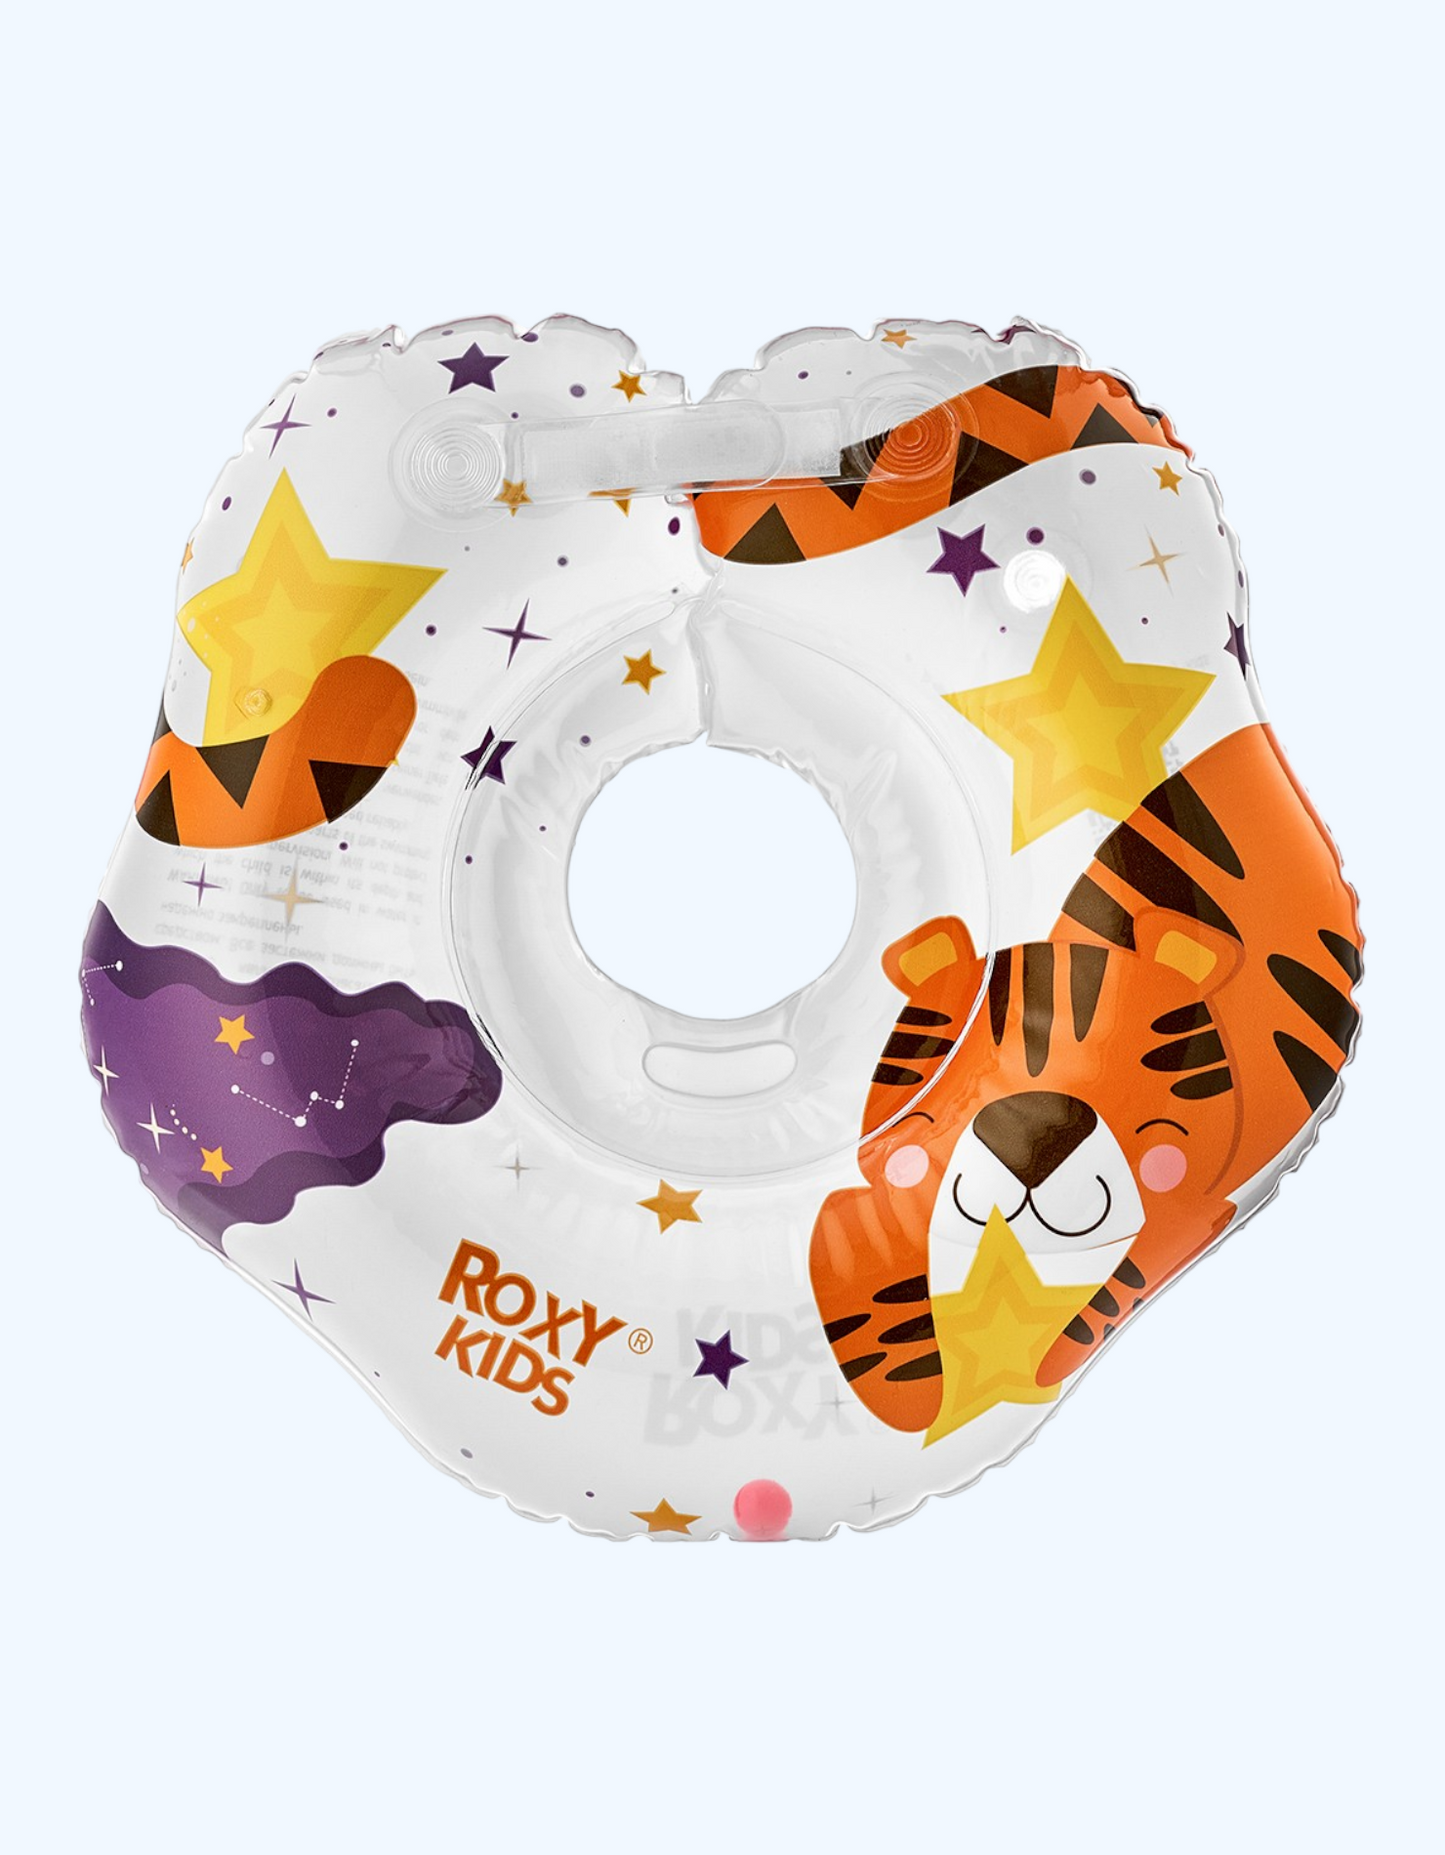 Roxy Kids Надувной круг на шею для купания малышей "Tiger", 0+ мес.